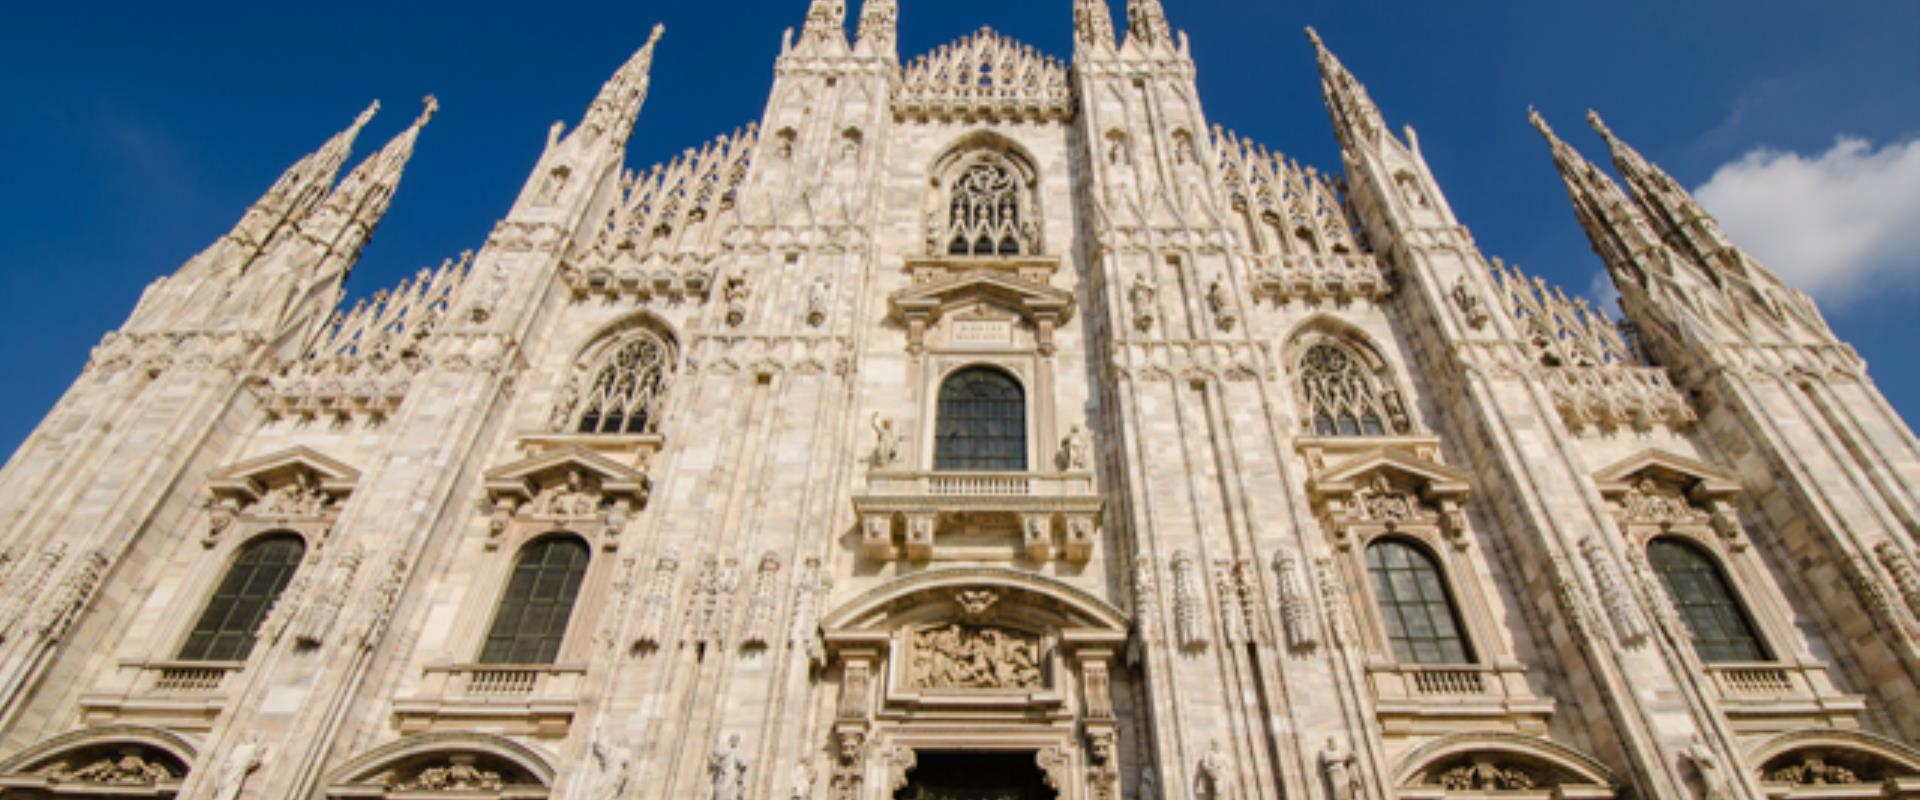 The Duomo of Milan, close to the Galleria Vittorio Emanuele and the Teatro alla Scala